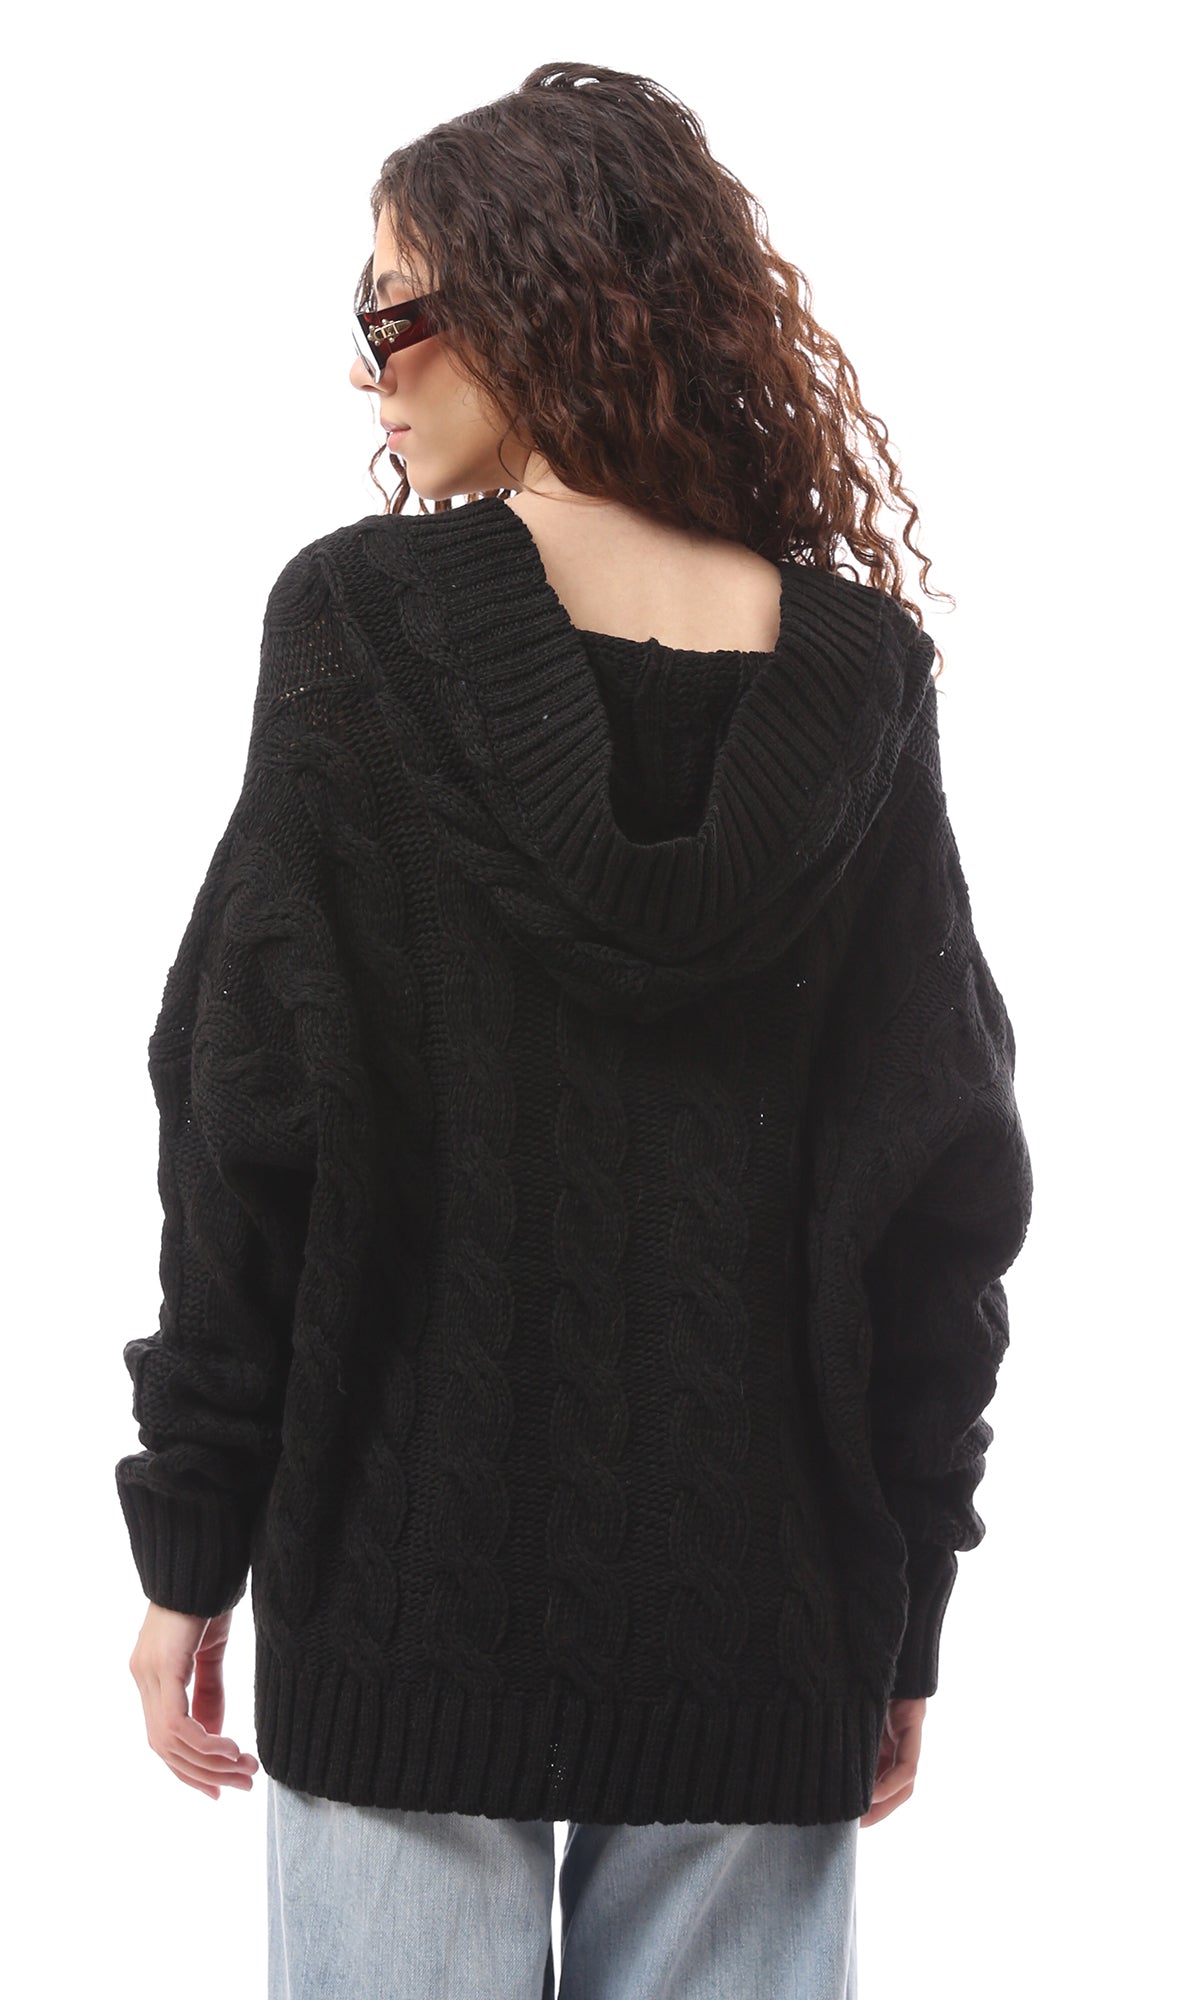 O170086 Knitted Slip On Comfy Black Hoodie